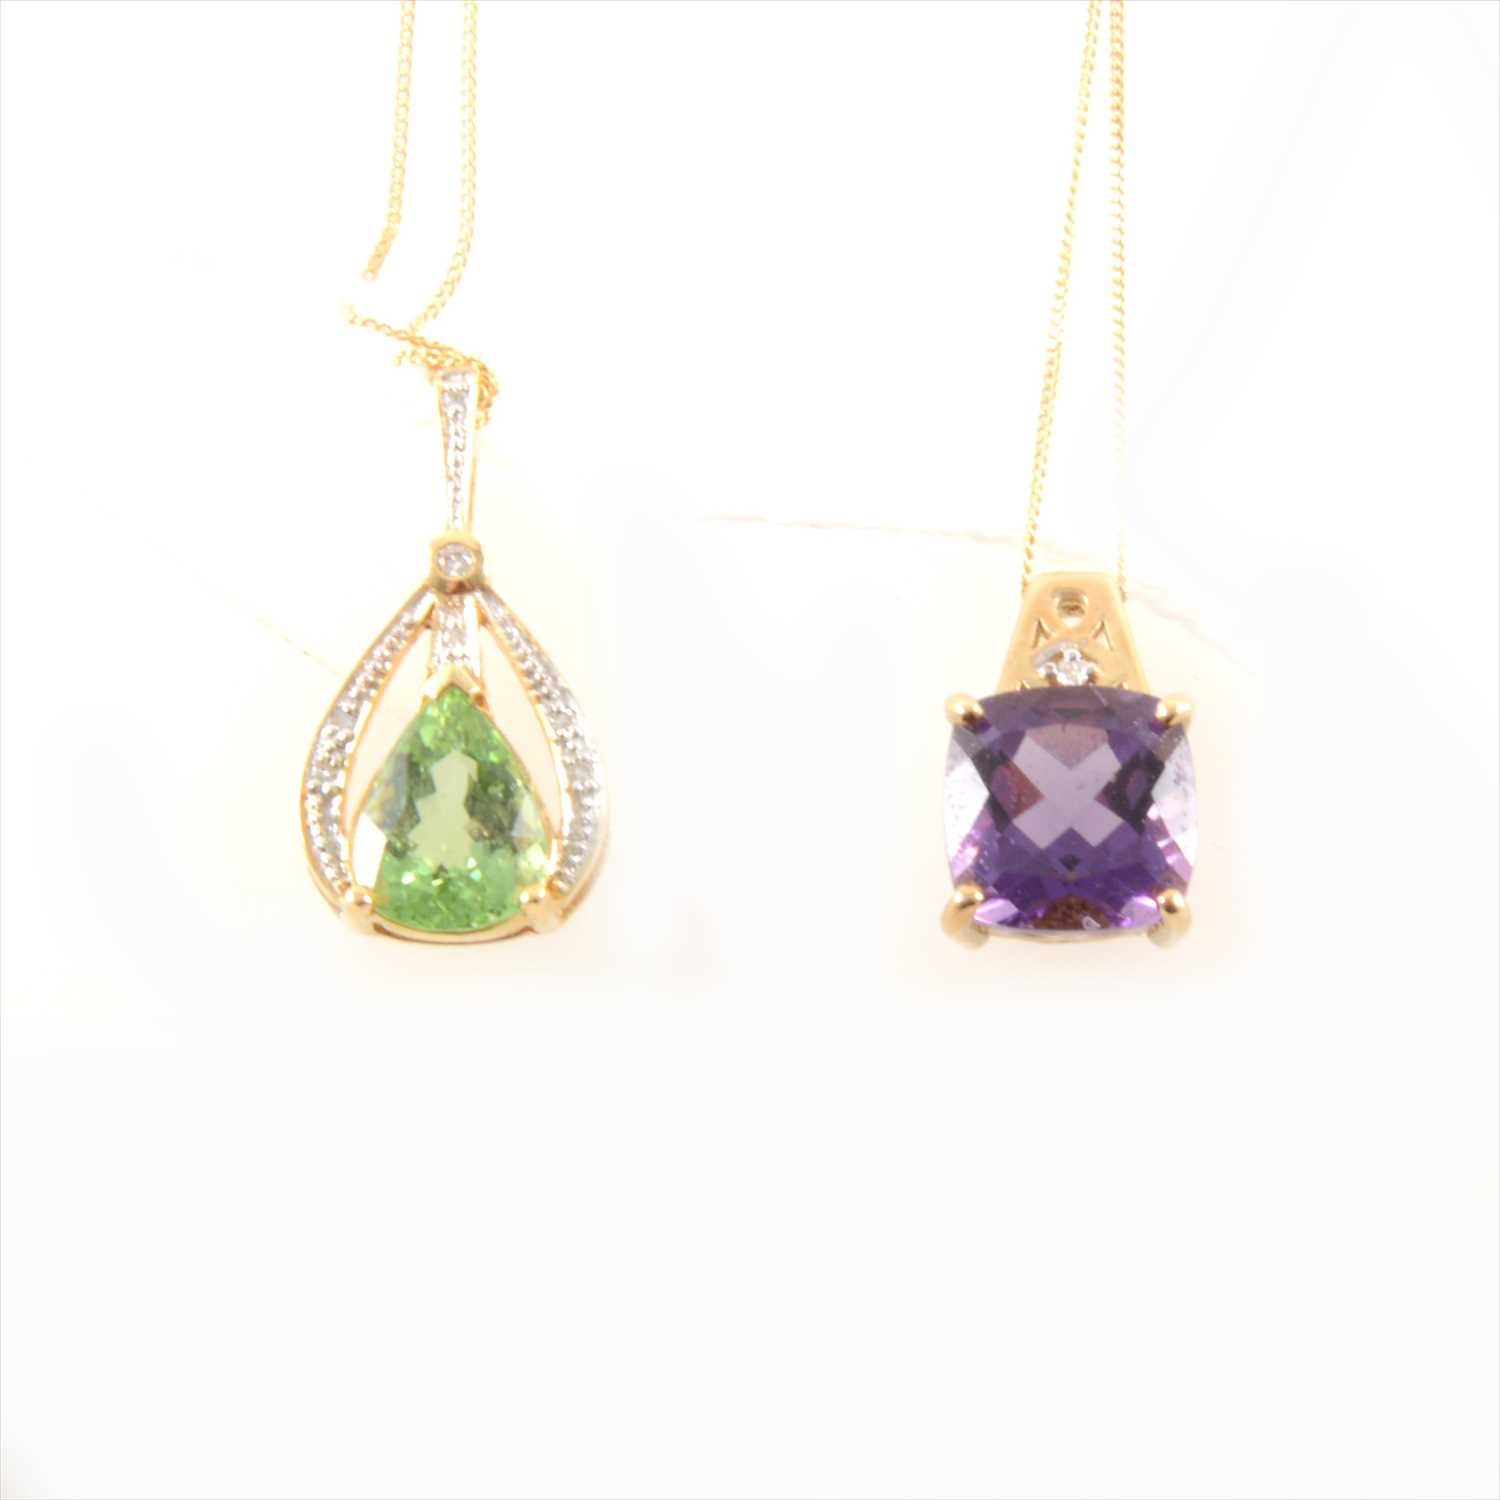 Lot 322 - A Paraiba tourmaline and diamond pendant with chain, and an amethyst and diamond pendant with chain.